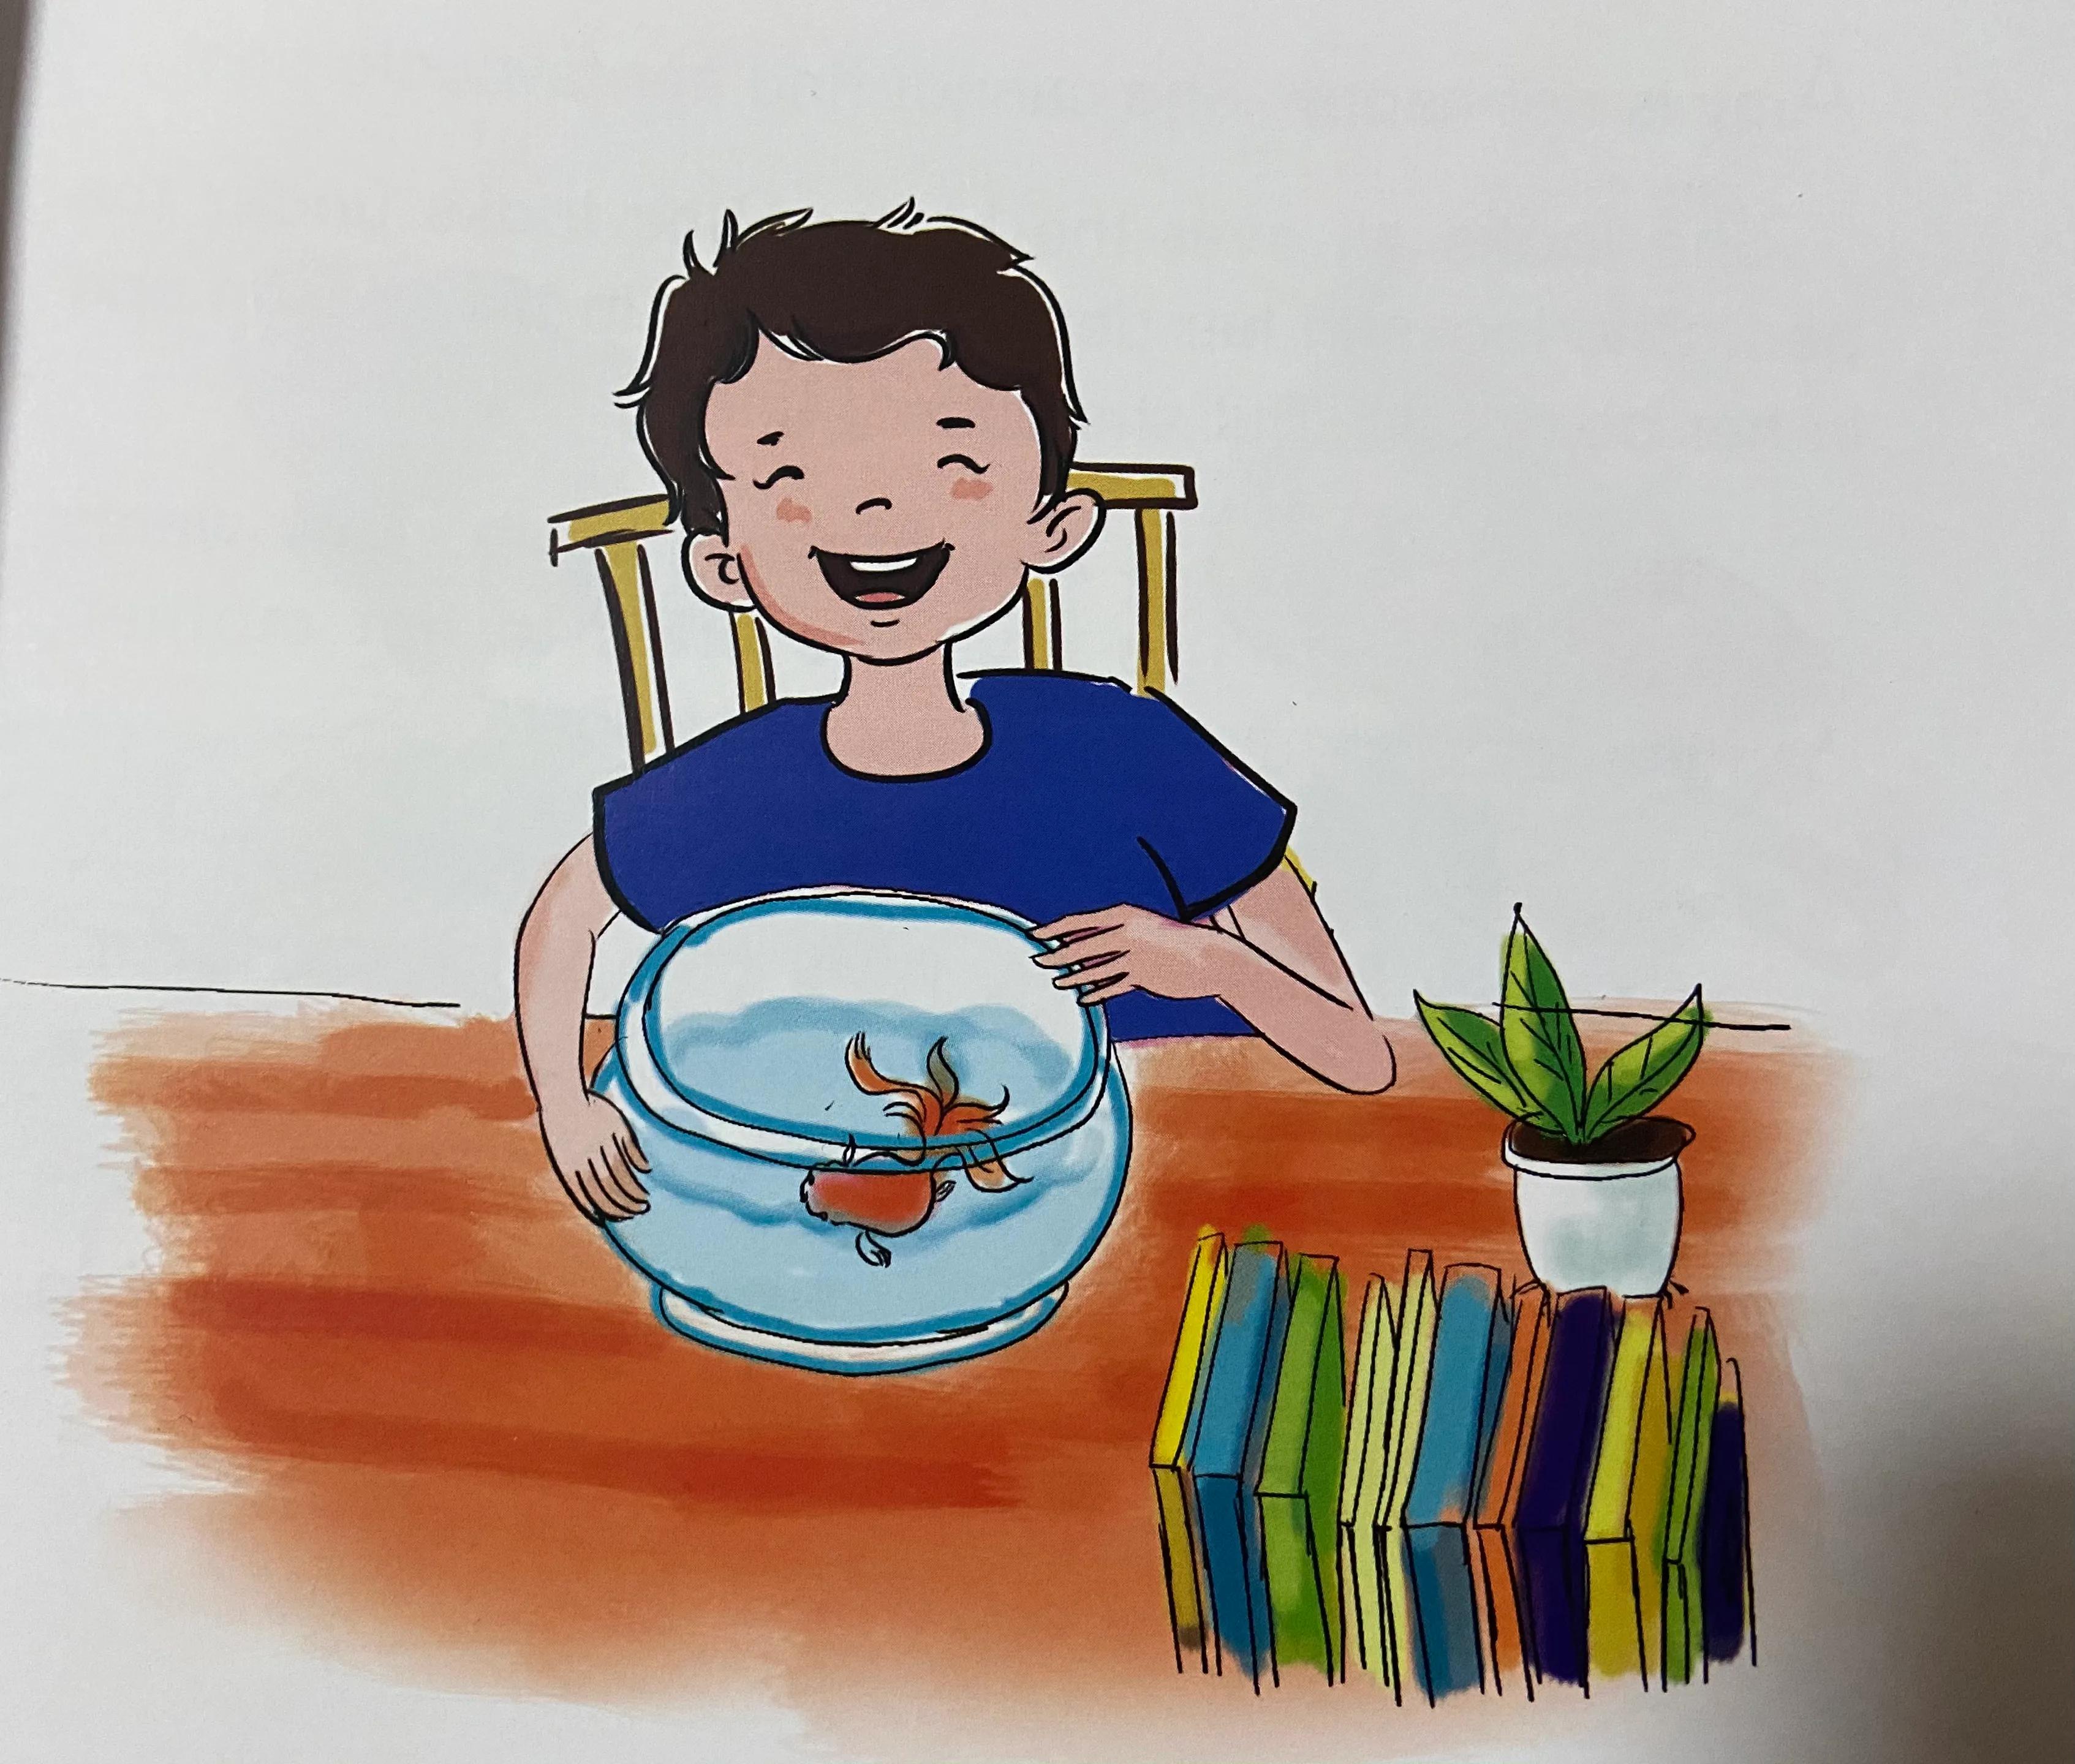 跟孩子一起读《Do Fish Breathe Water?》，选自《每天一个故事》